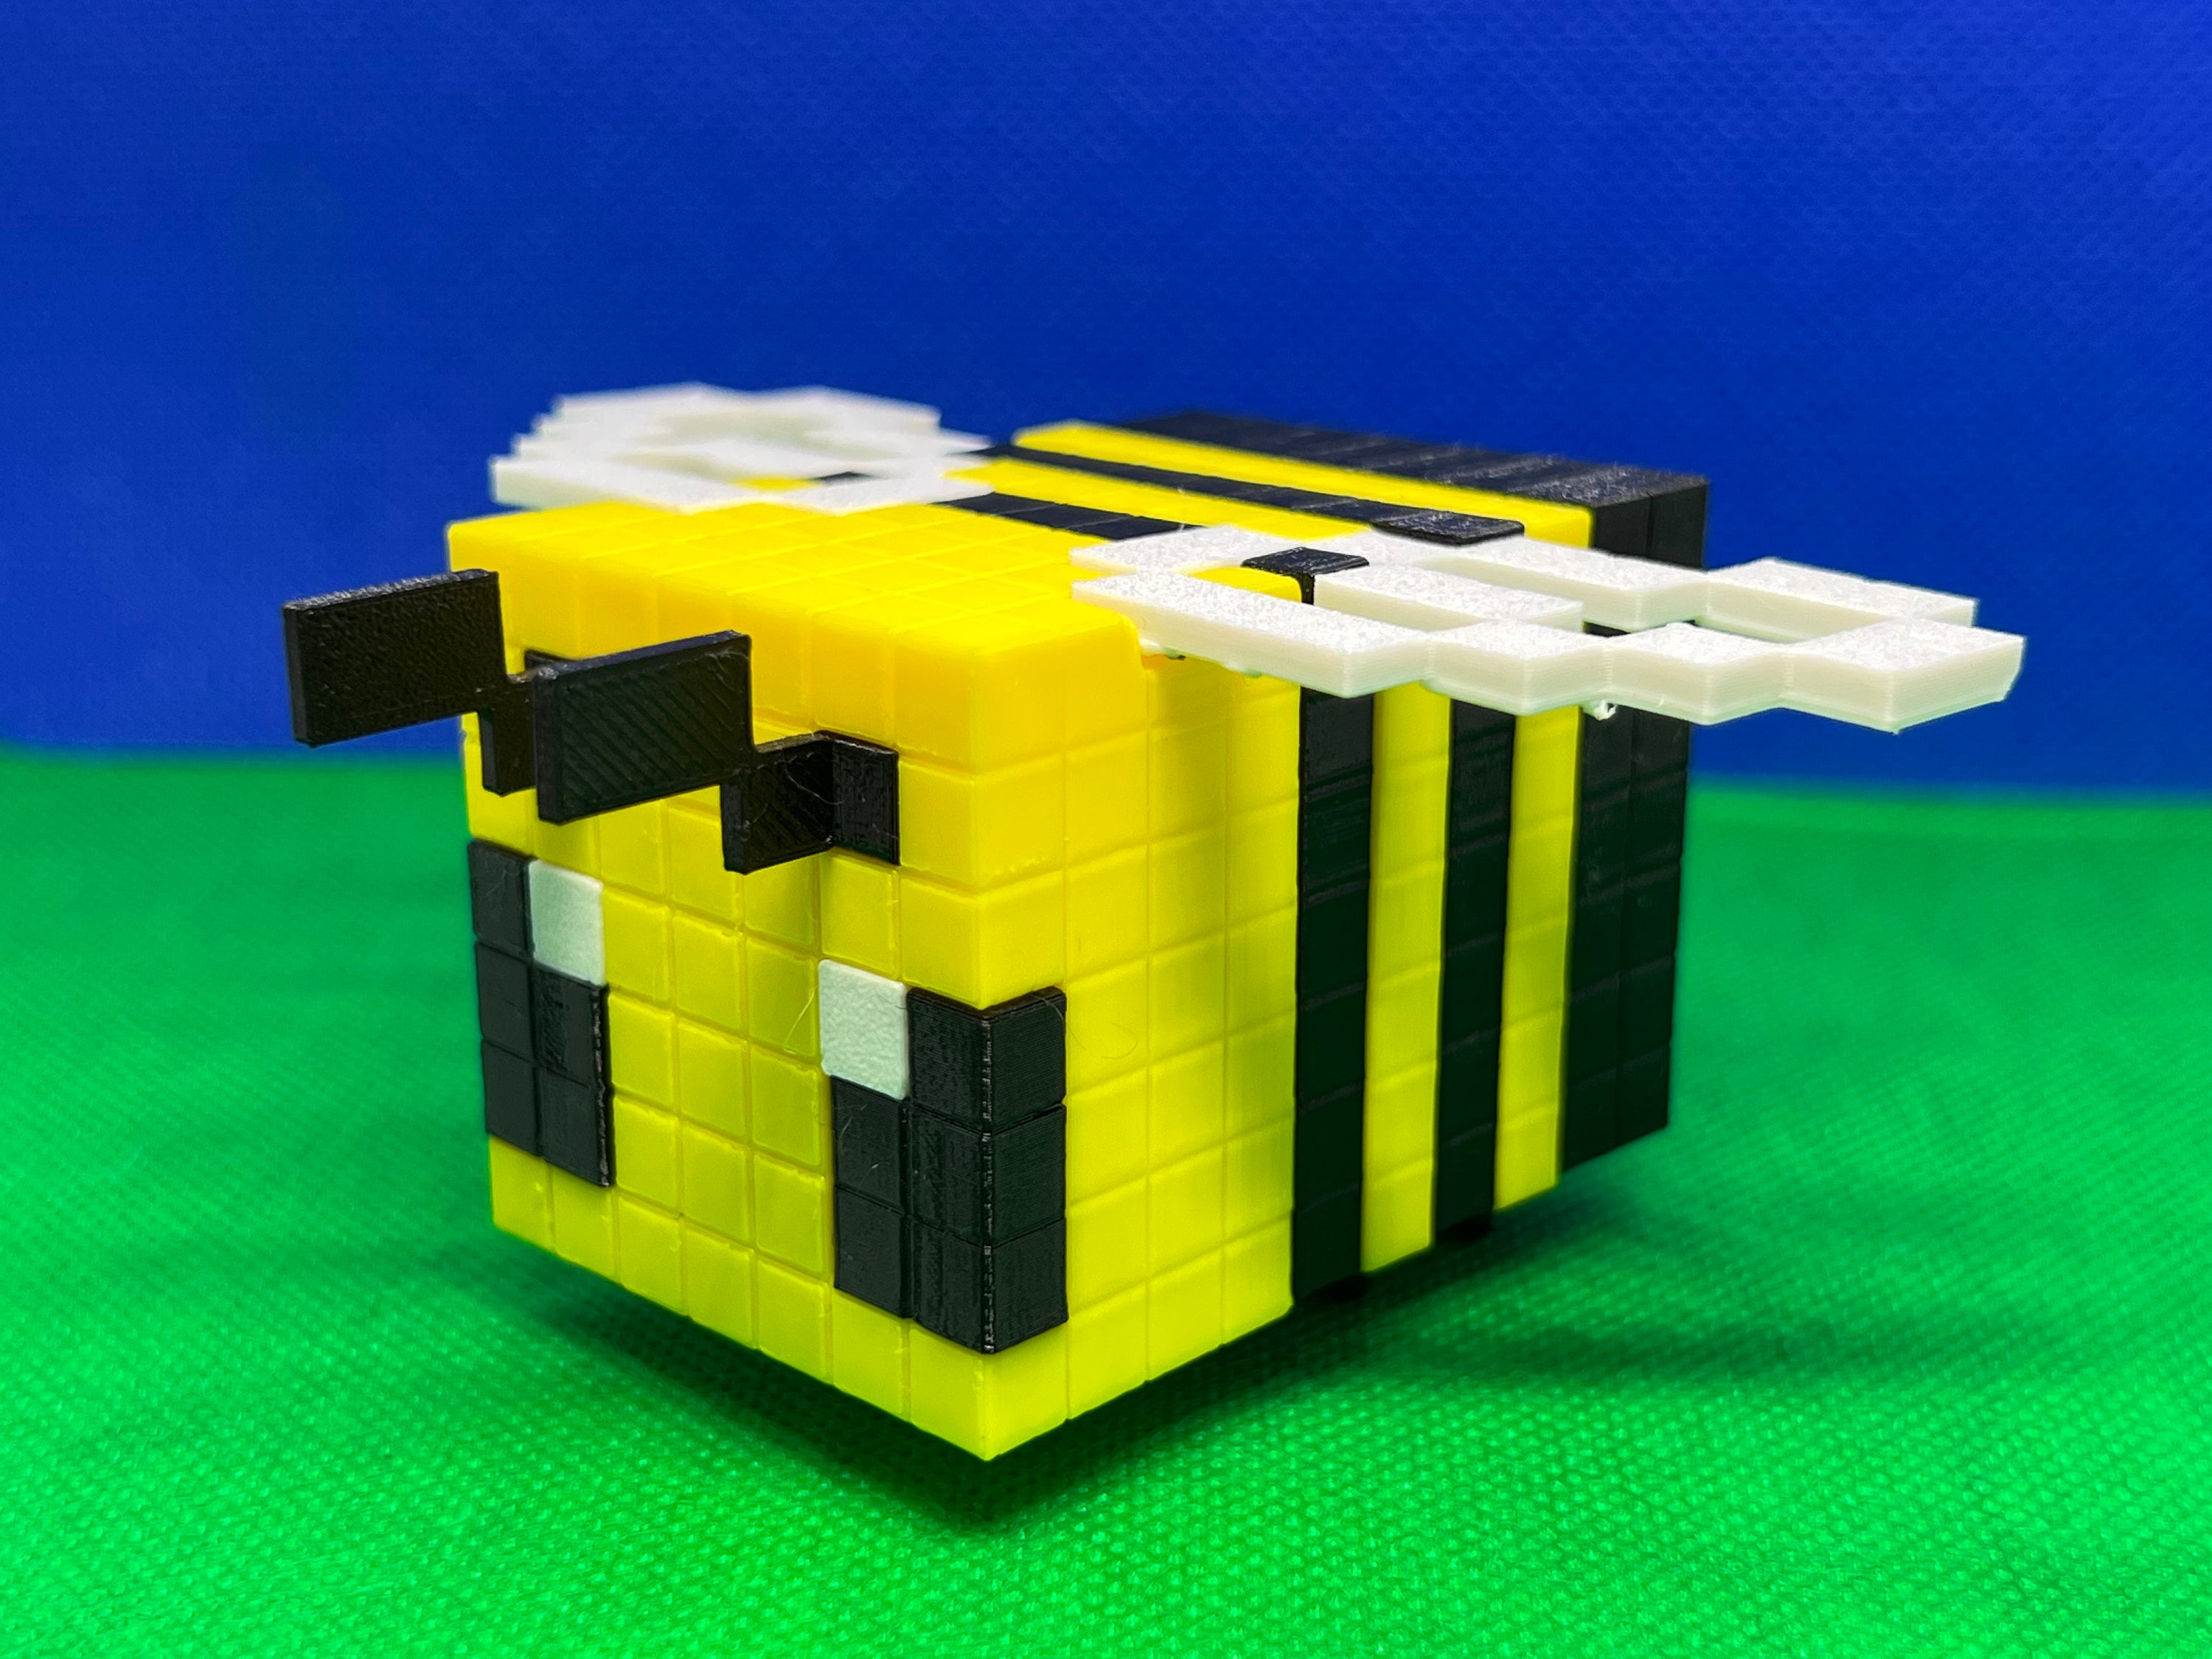 Papercraft bee : r/Minecraft